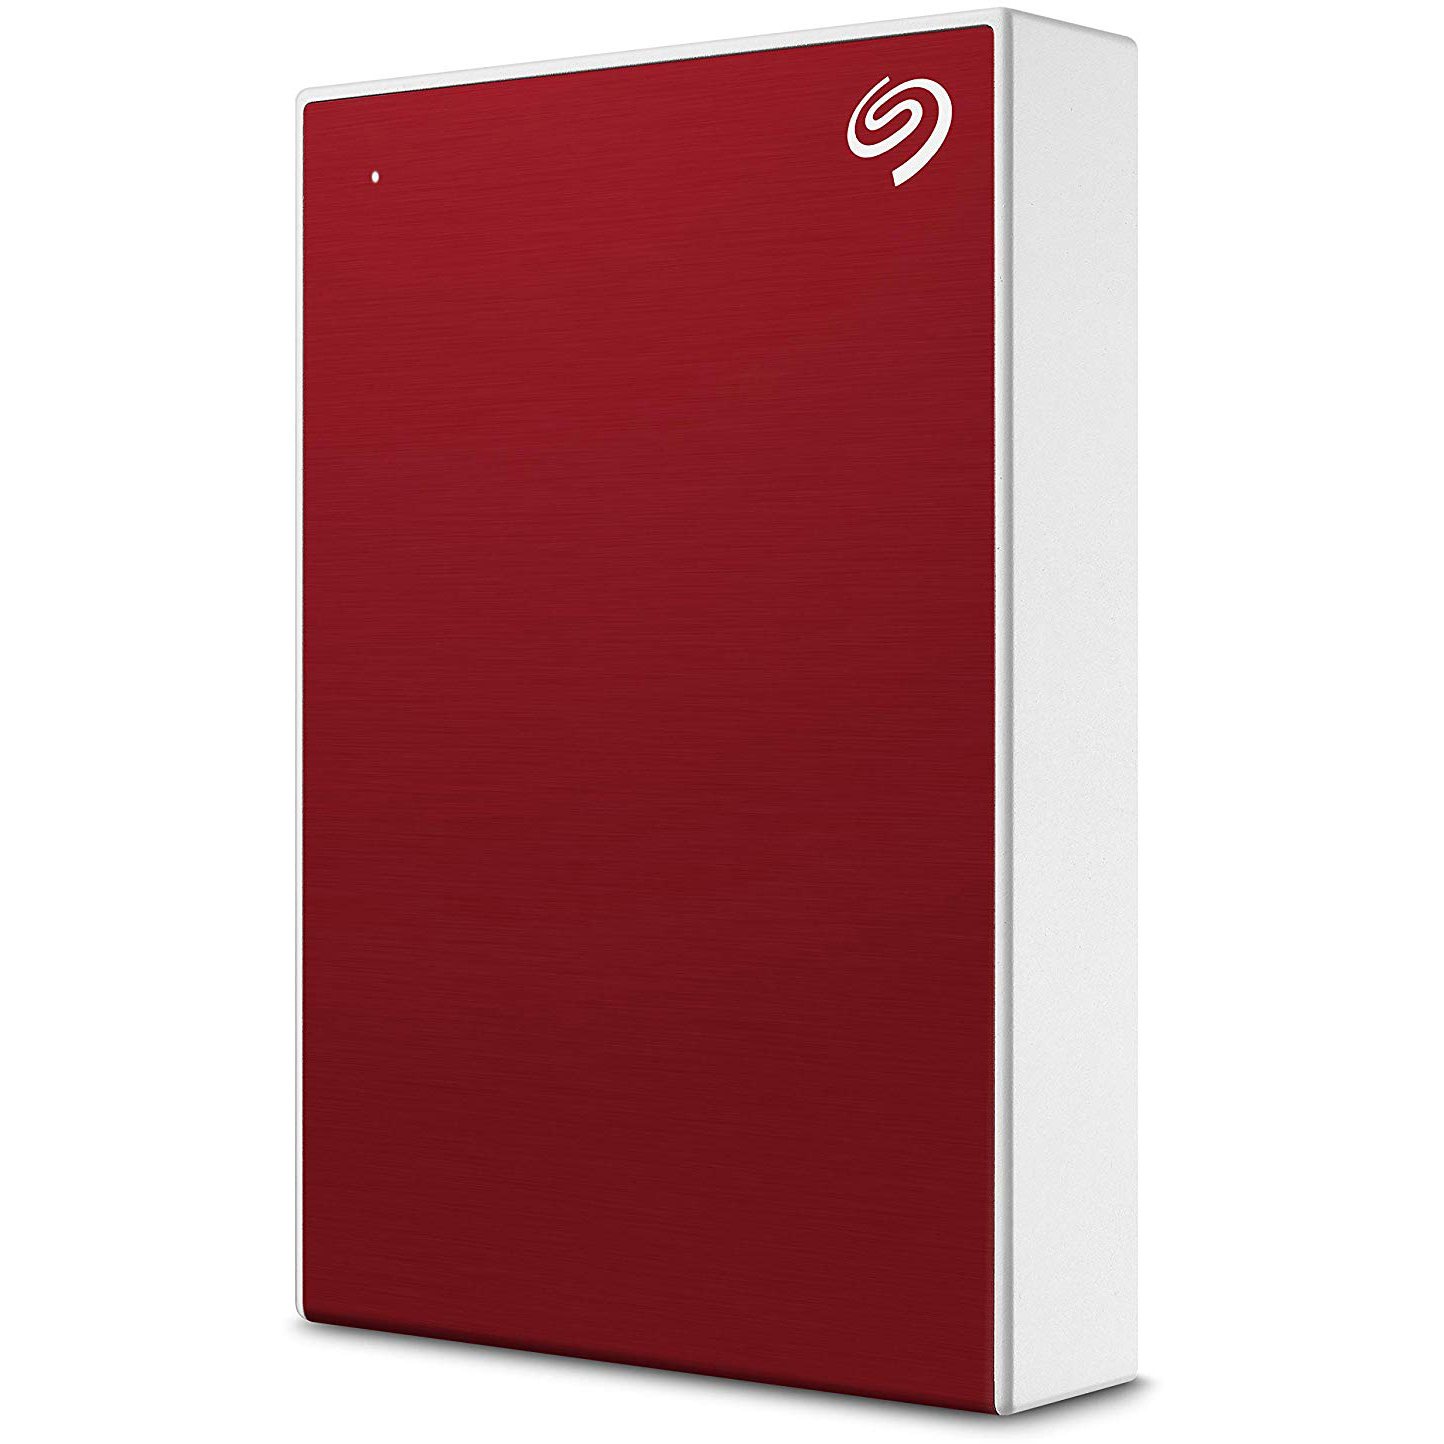 Original Seagate Backup Plus 5TB Red USB 3.0 External Hard Drive (STHP5000403)